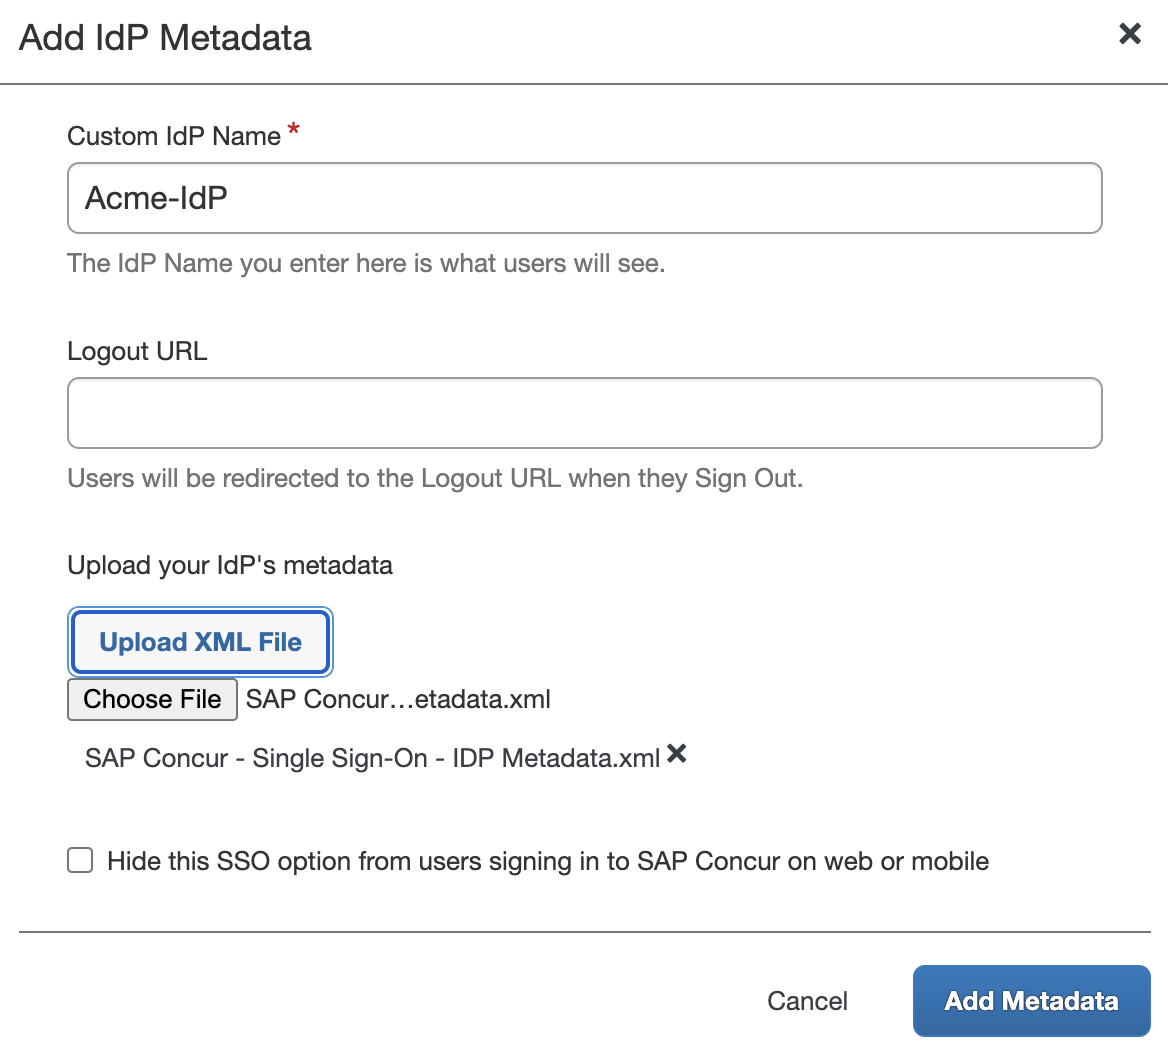 SAP Concur Add IdP Metadata Window